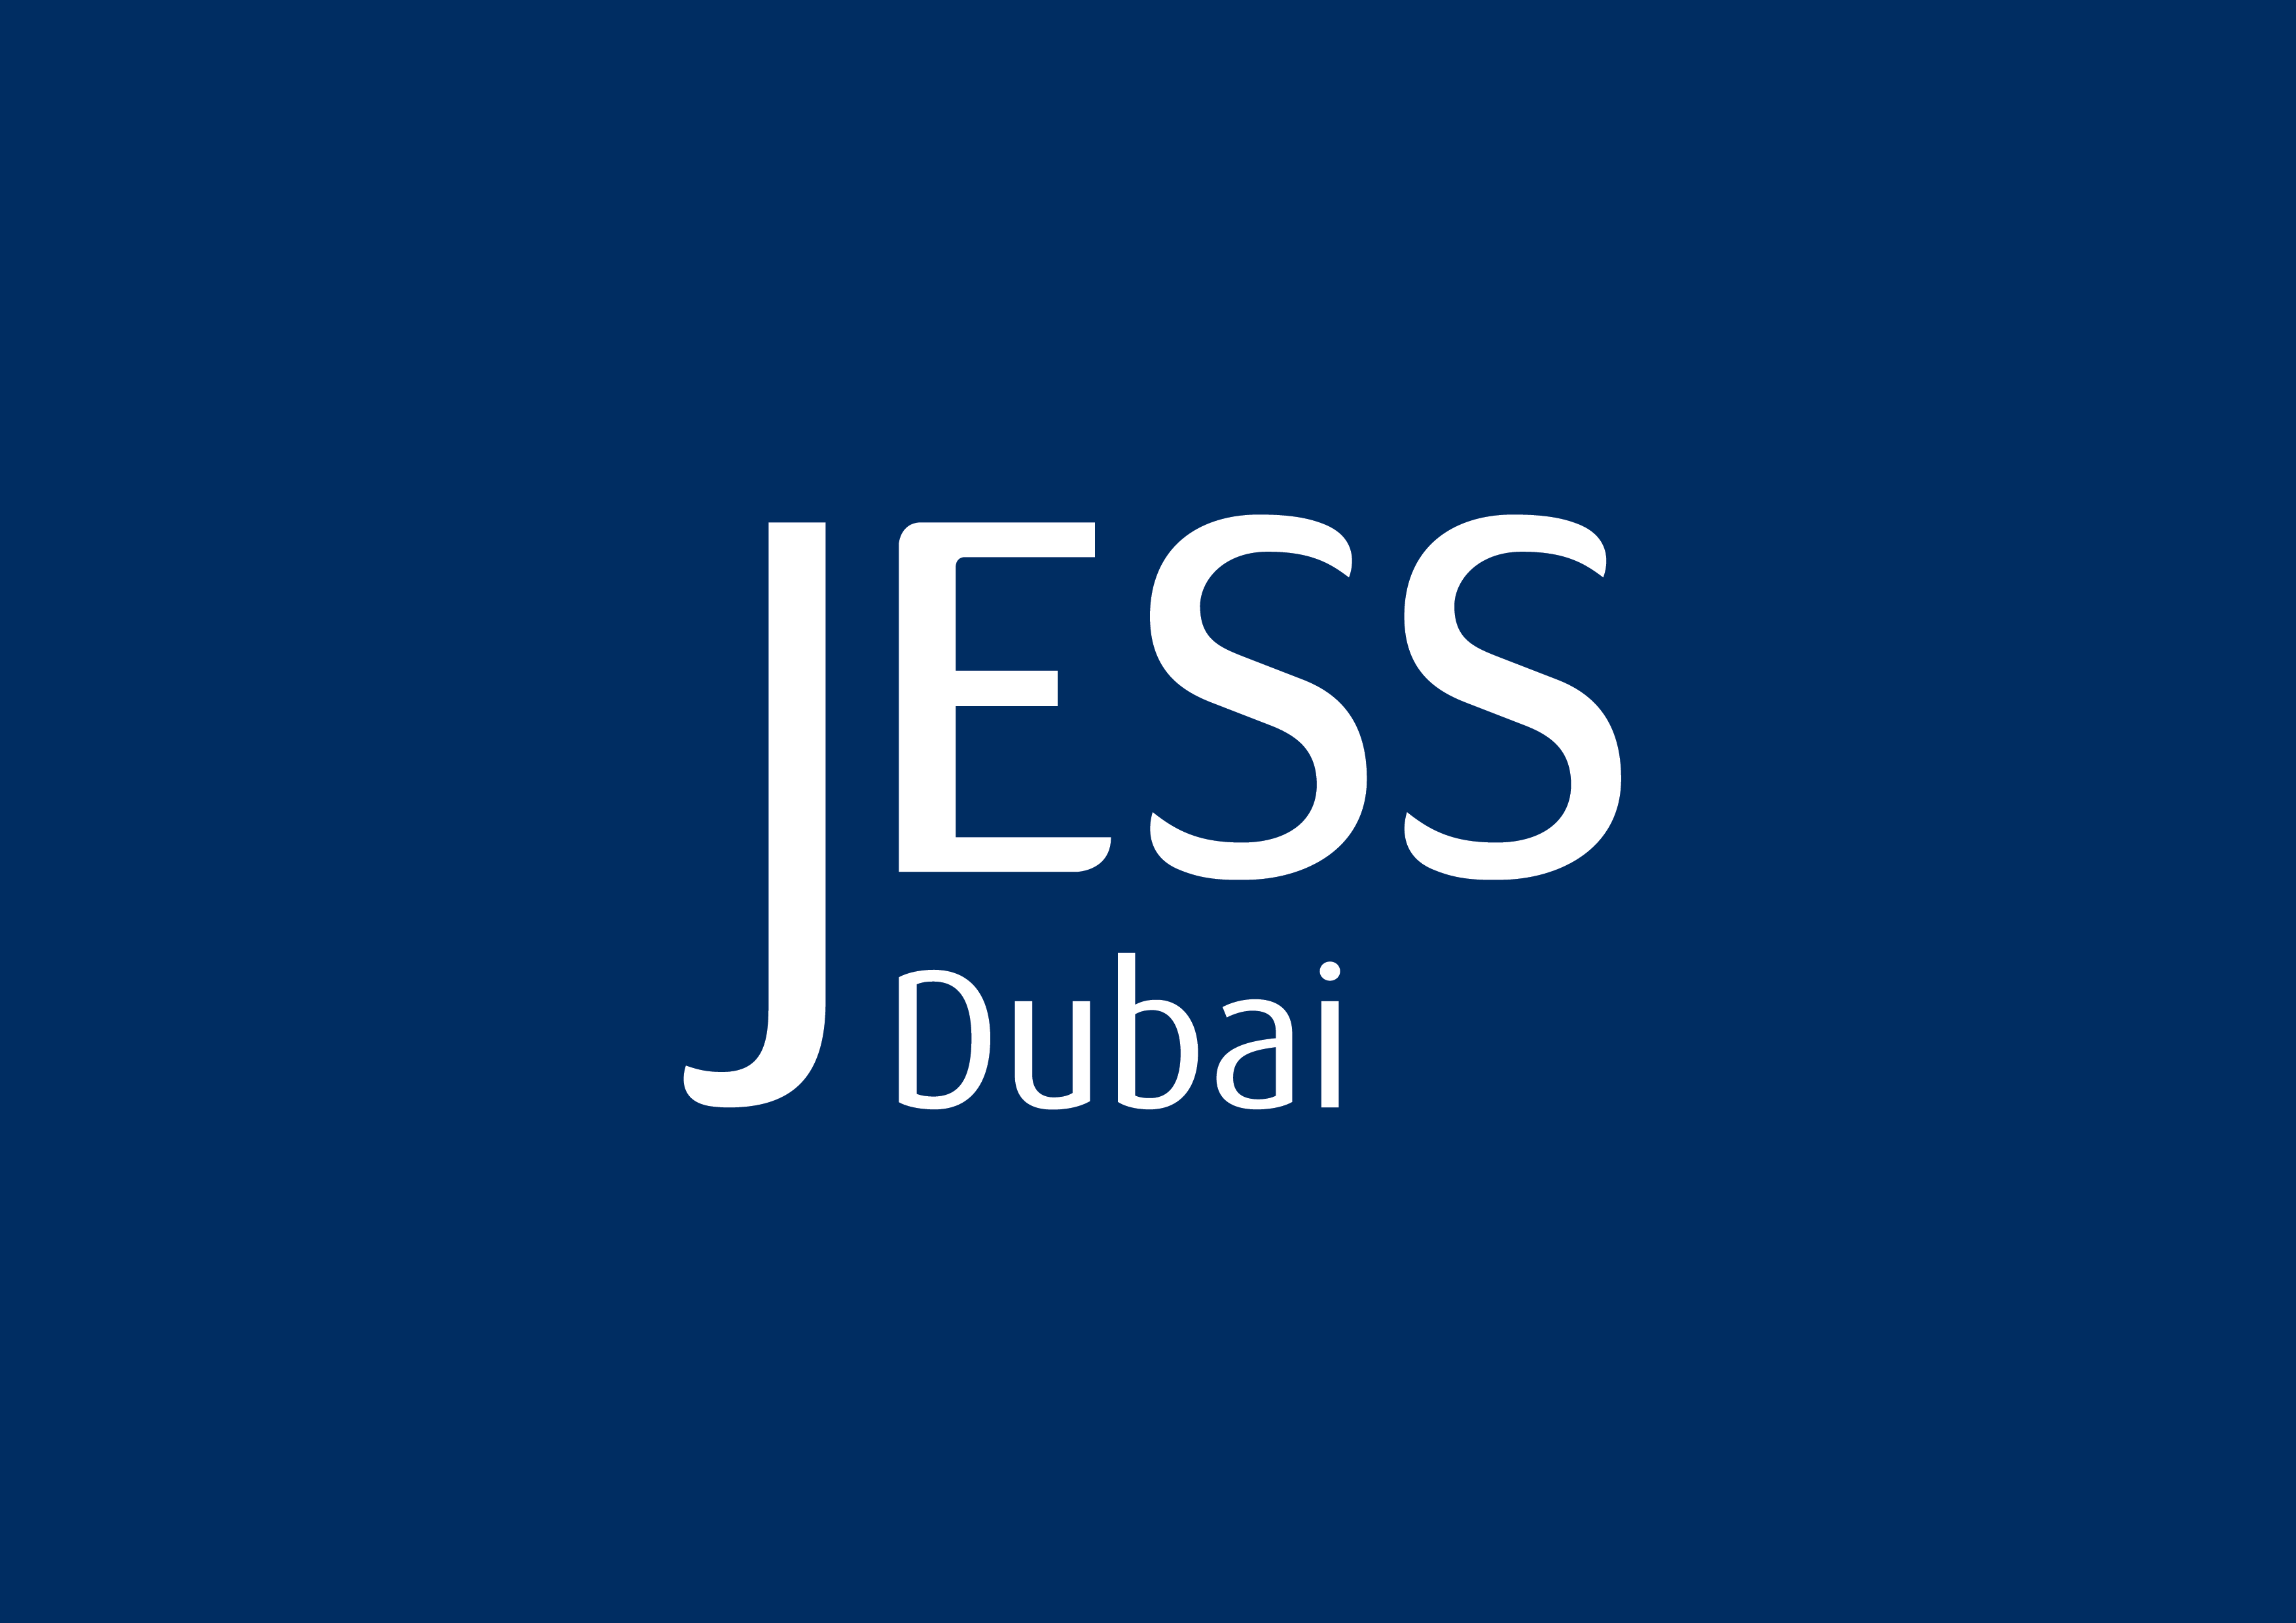 Jess_Dubai_text_logo_backgrd